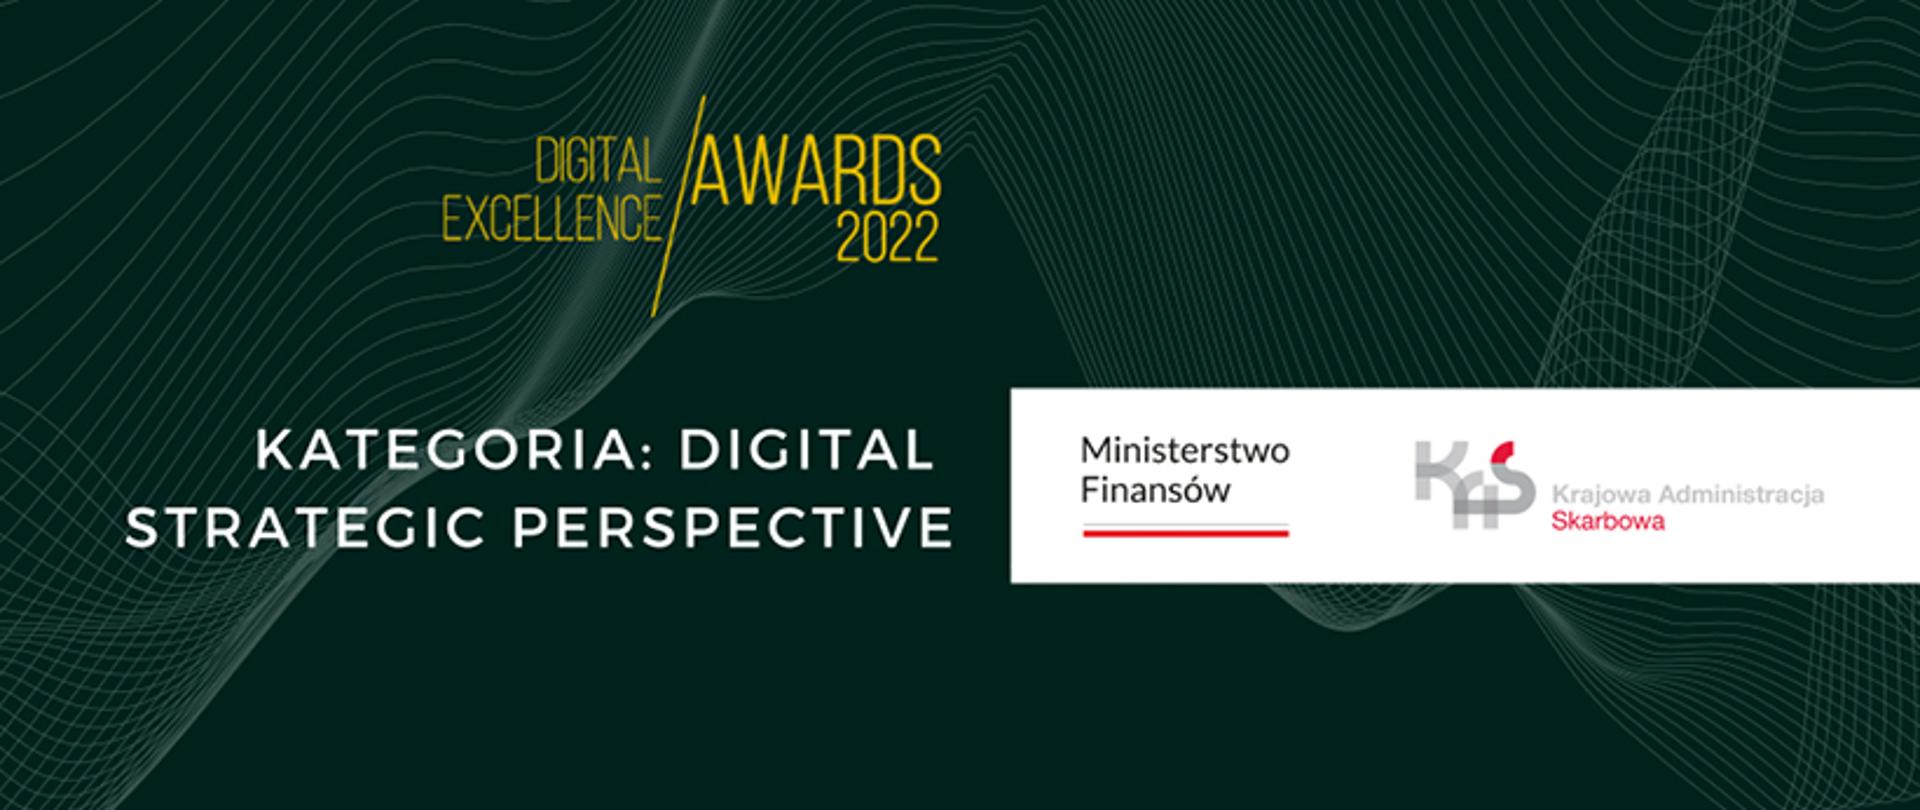 Napis Digital Excellence Awards 2022, logo MF i KAS, Digital Strategic Perspective, Finalista